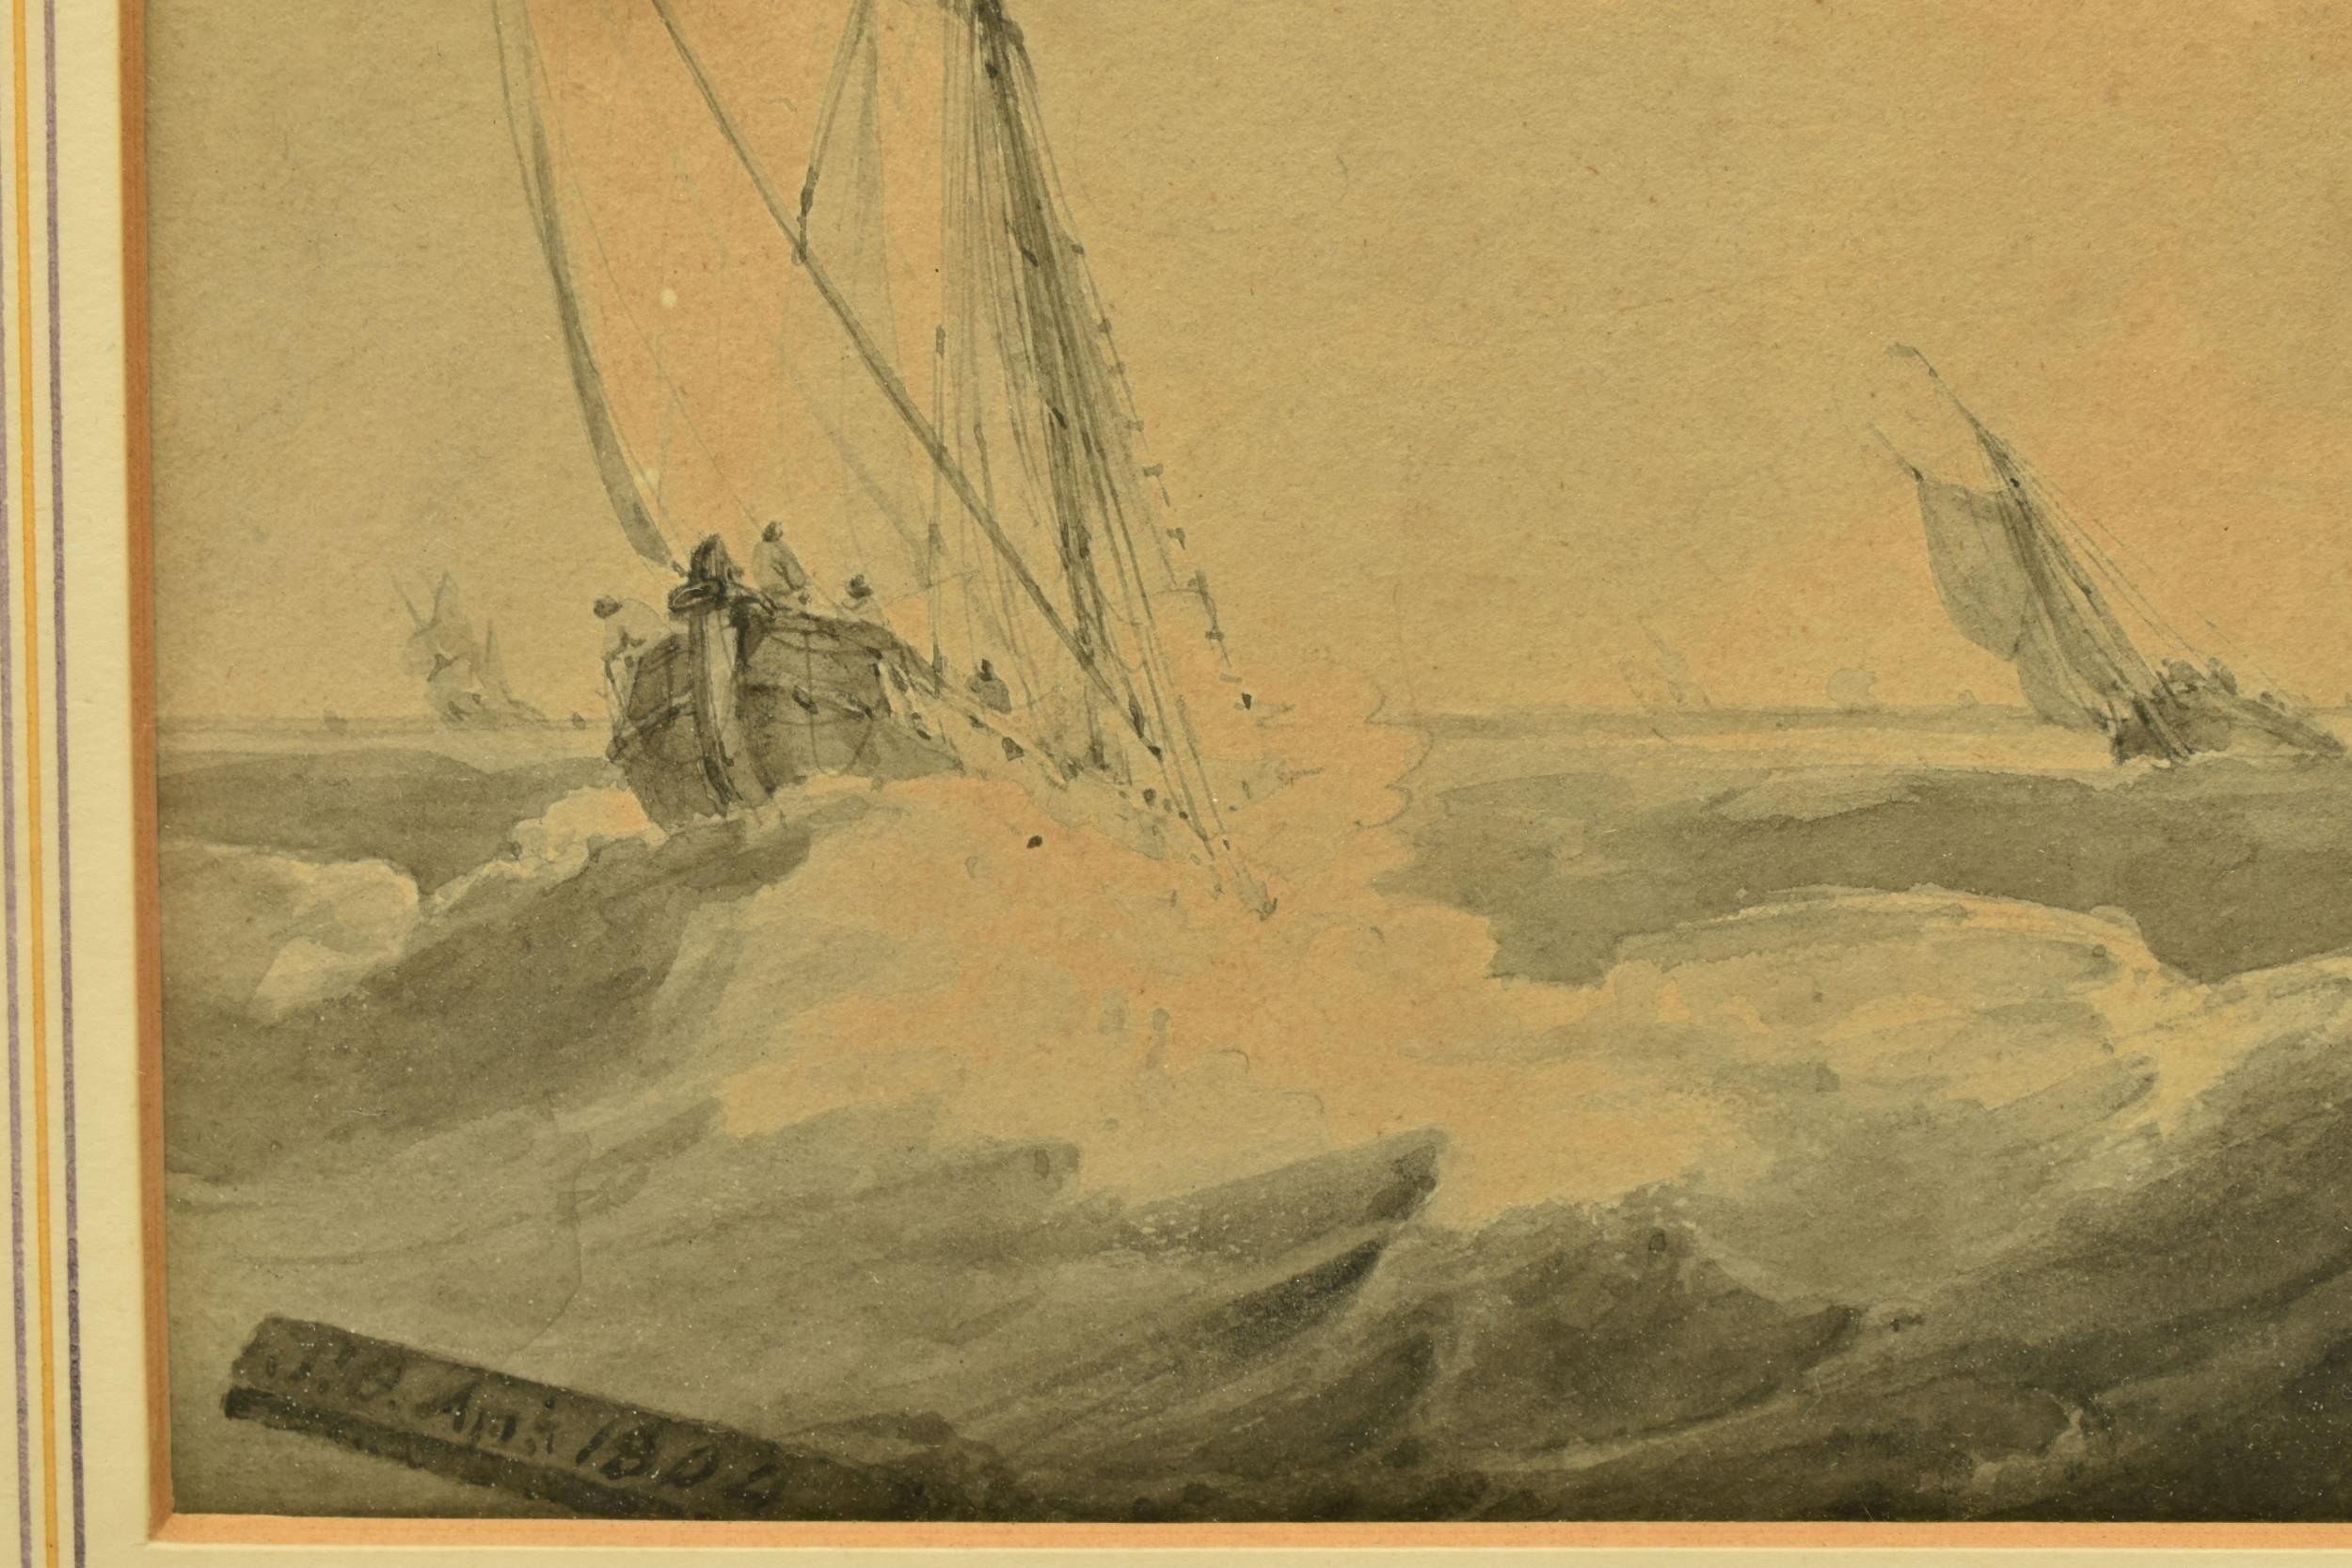 Samuel Owen, Maritime Scene Shipping in Rough Seas – 1804 watercolour and ink